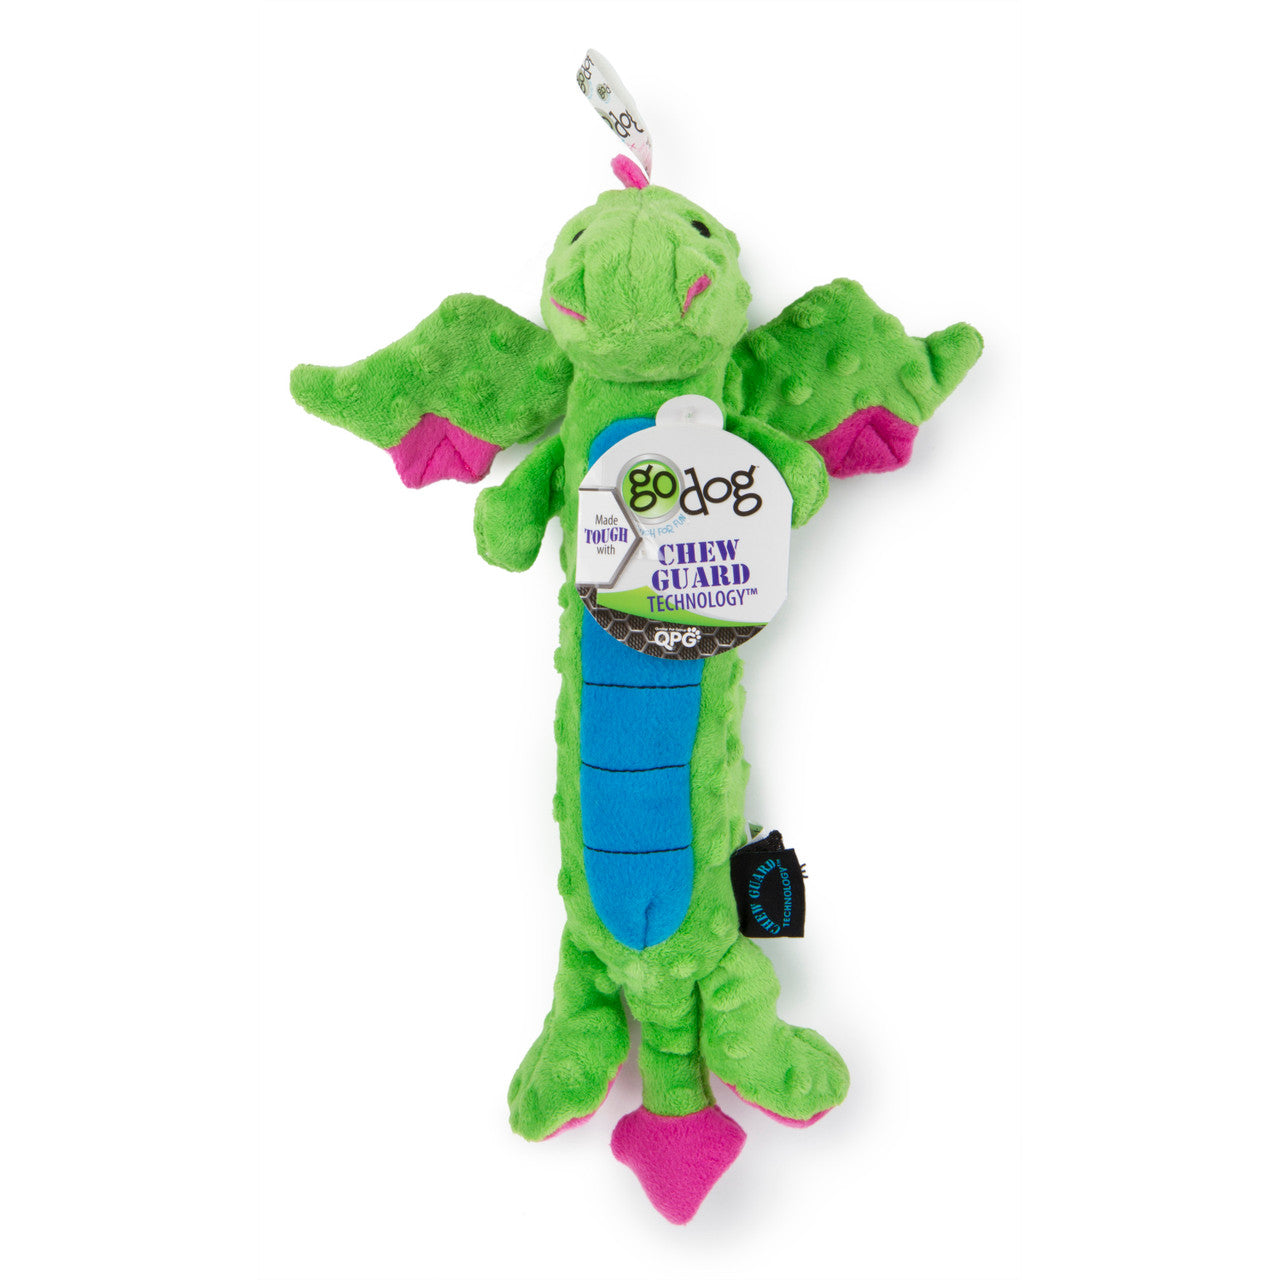 goDog Dragons Skinny Dog Toy with Chew Guard Technology Plush Squeaker LG